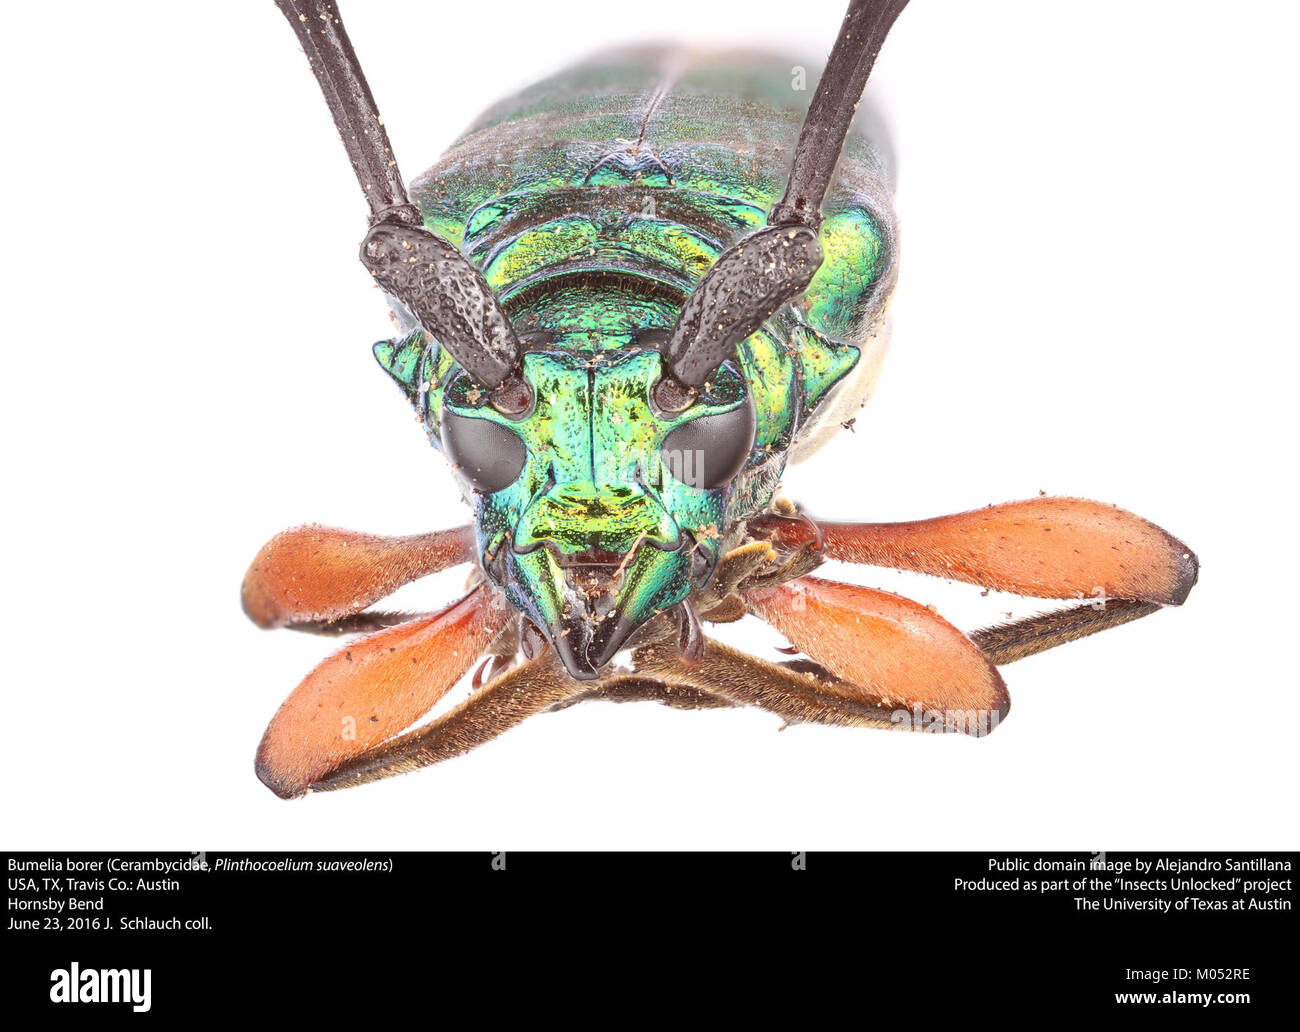 Bumelia borer (Cerambycidae, Plinthocoelium suaveolens) (27989288921) Stock Photo